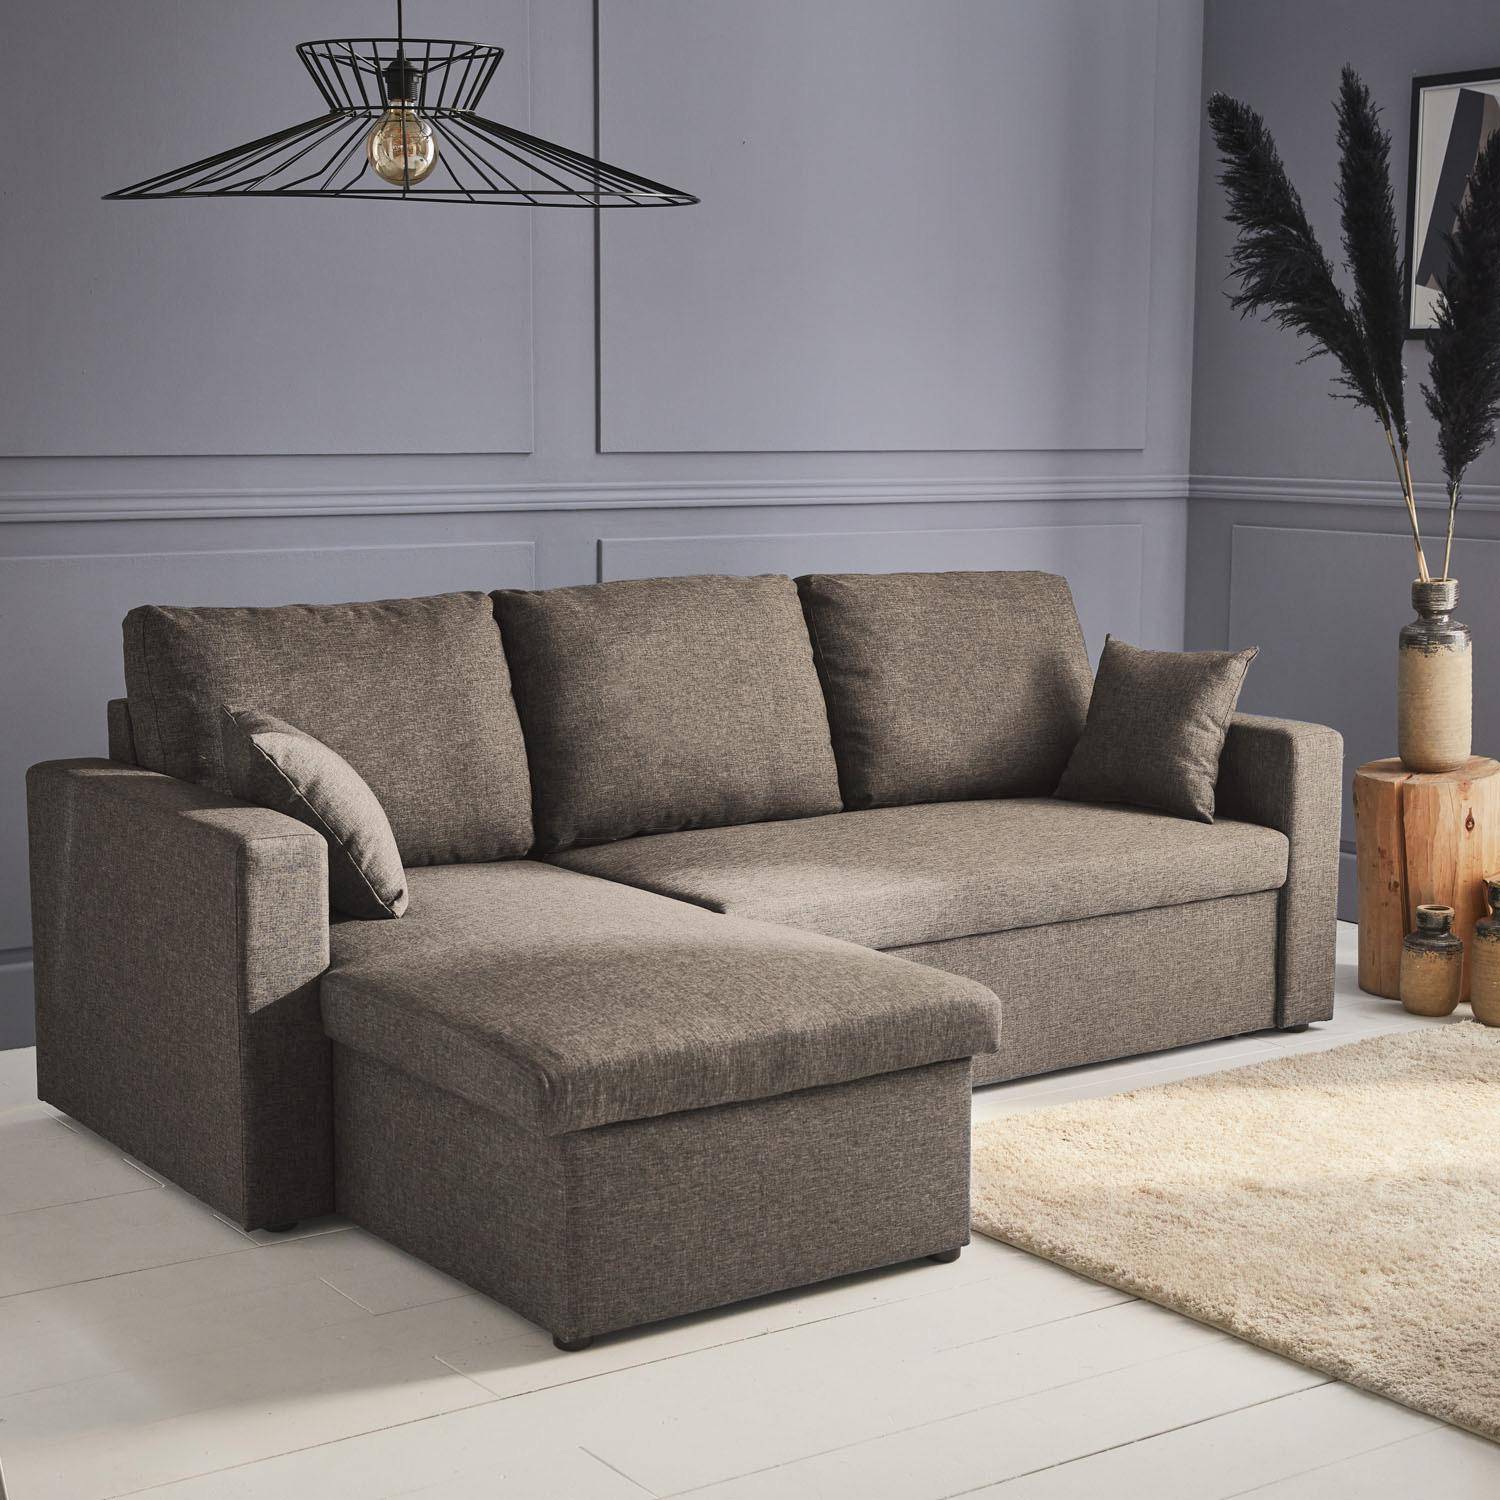 3-seater reversible brown corner sofa bed with storage box, brown, L219xD81xH68cm, IDA,sweeek,Photo1